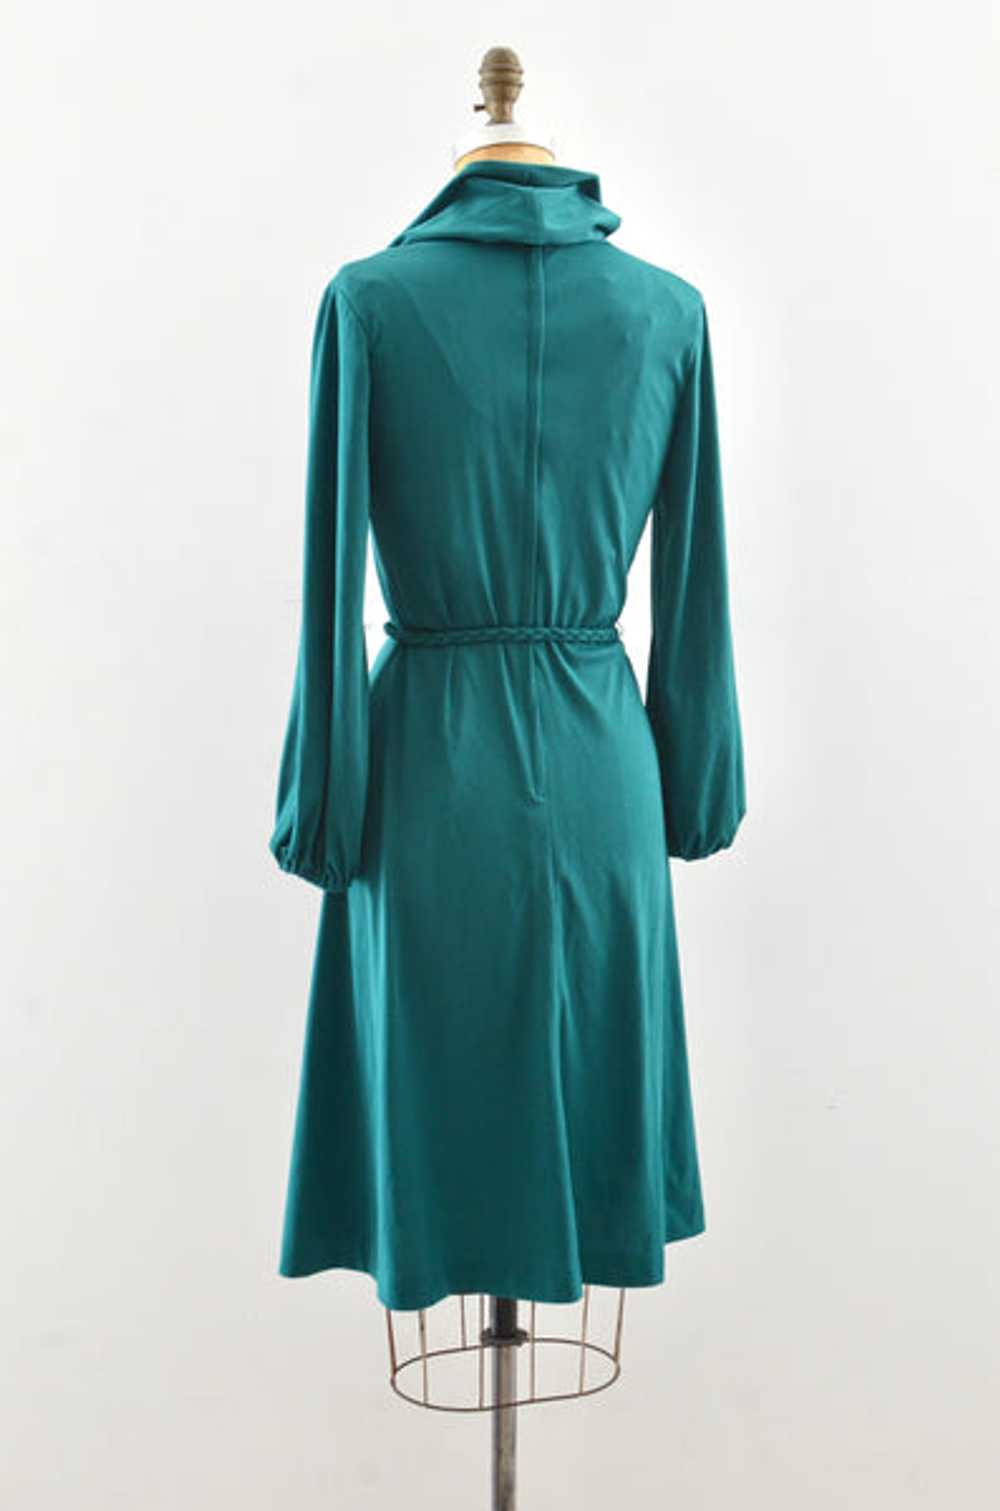 70's Jewel Green Dress - image 3